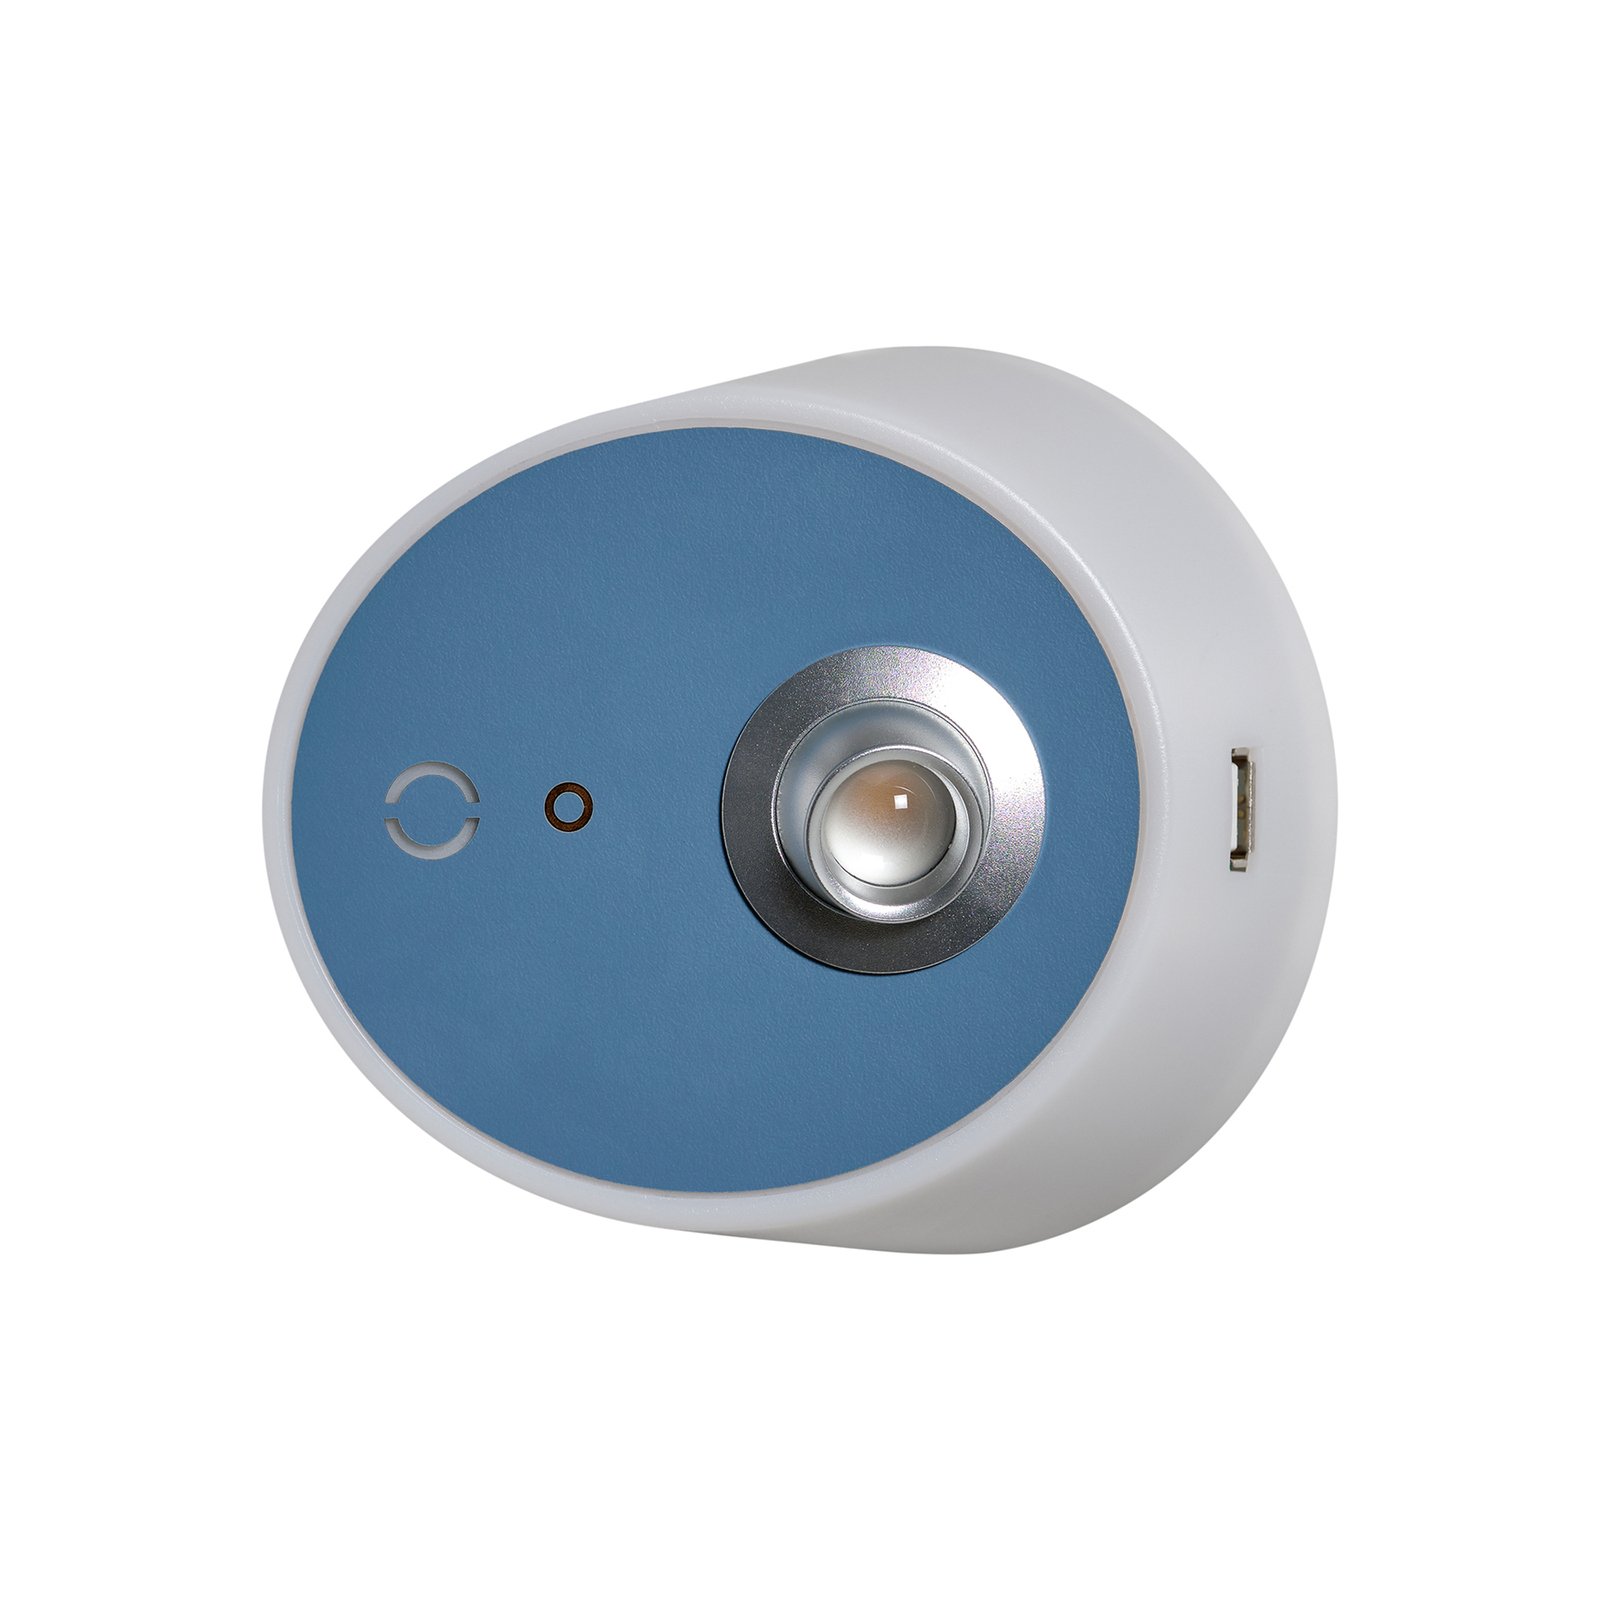 Zoom LED wall light, spot, USB port, blue